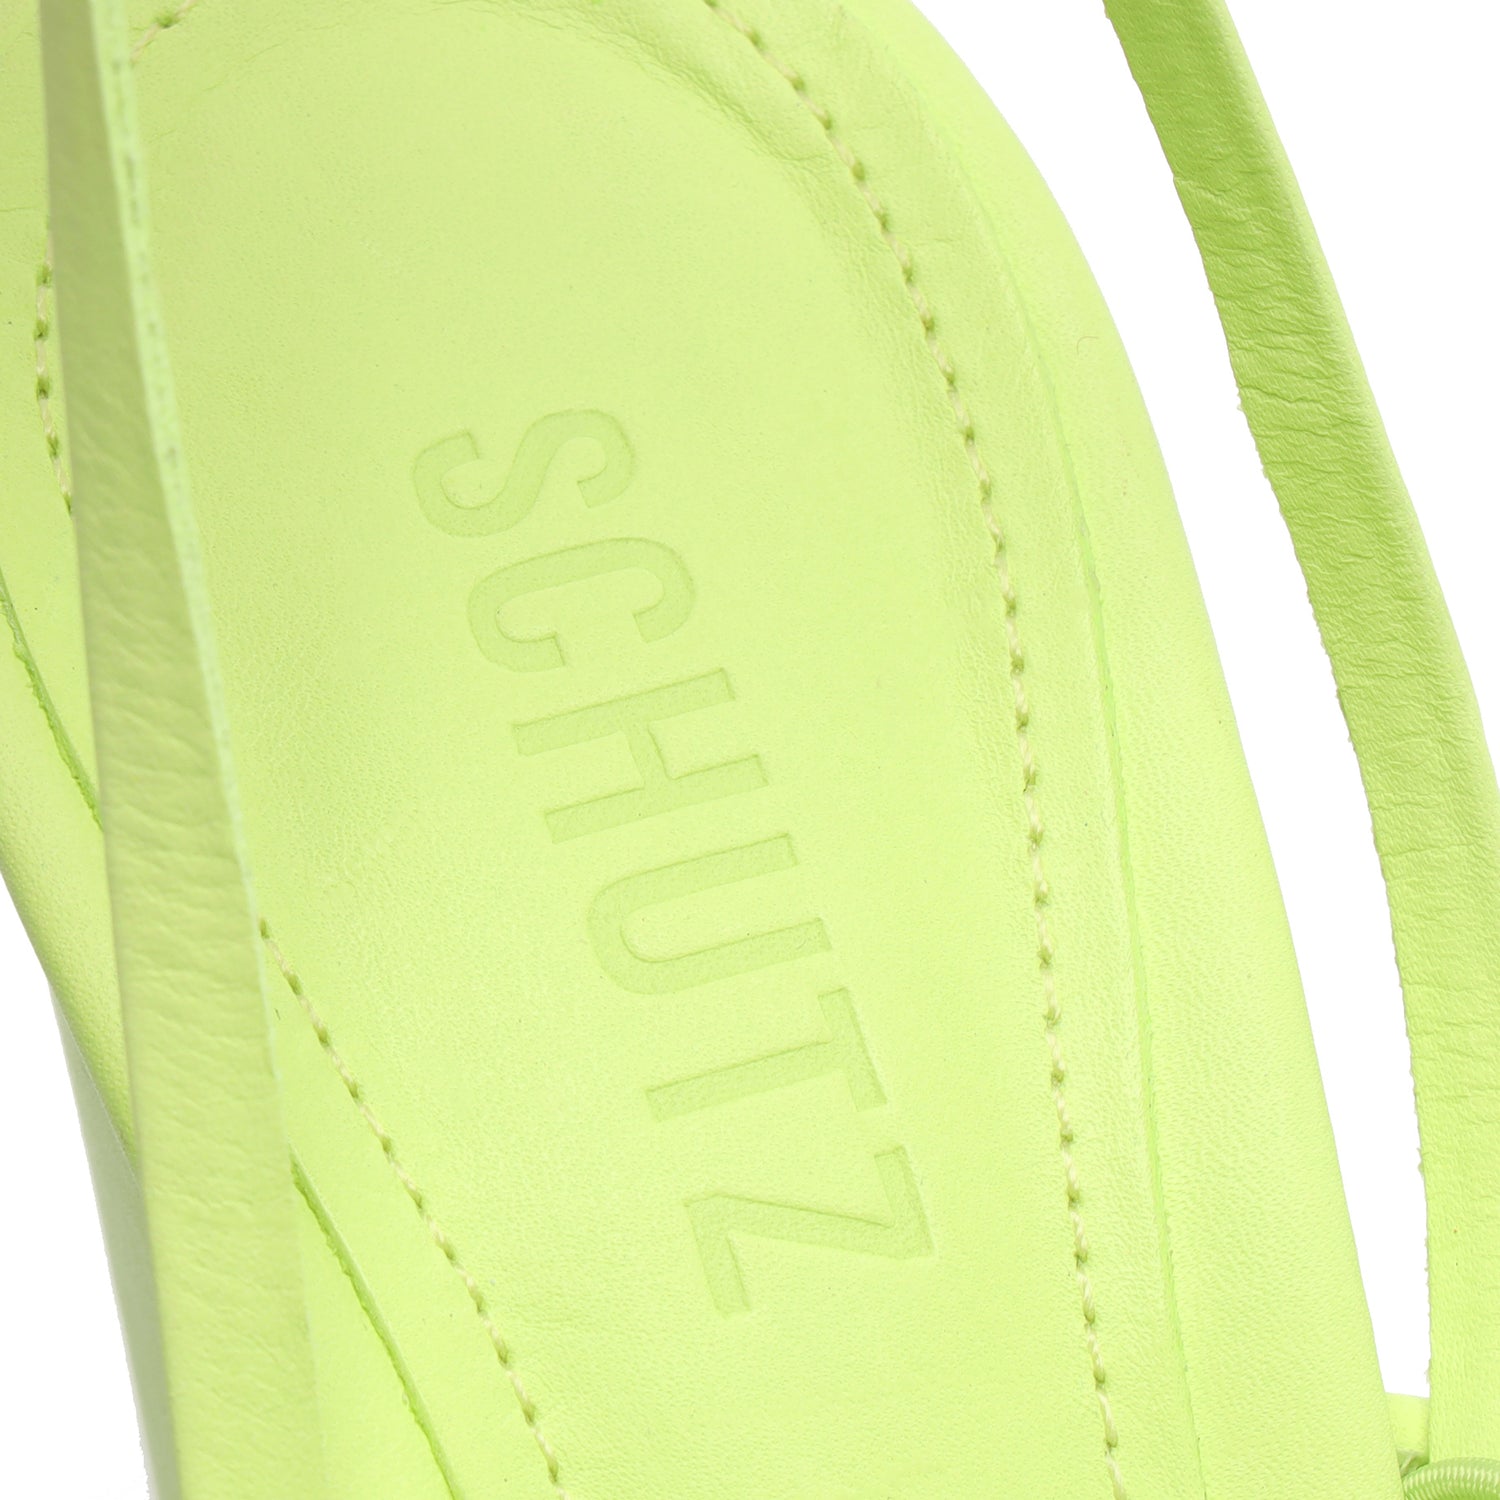 Zarda High Block Sandal Sandals Sale    - Schutz Shoes